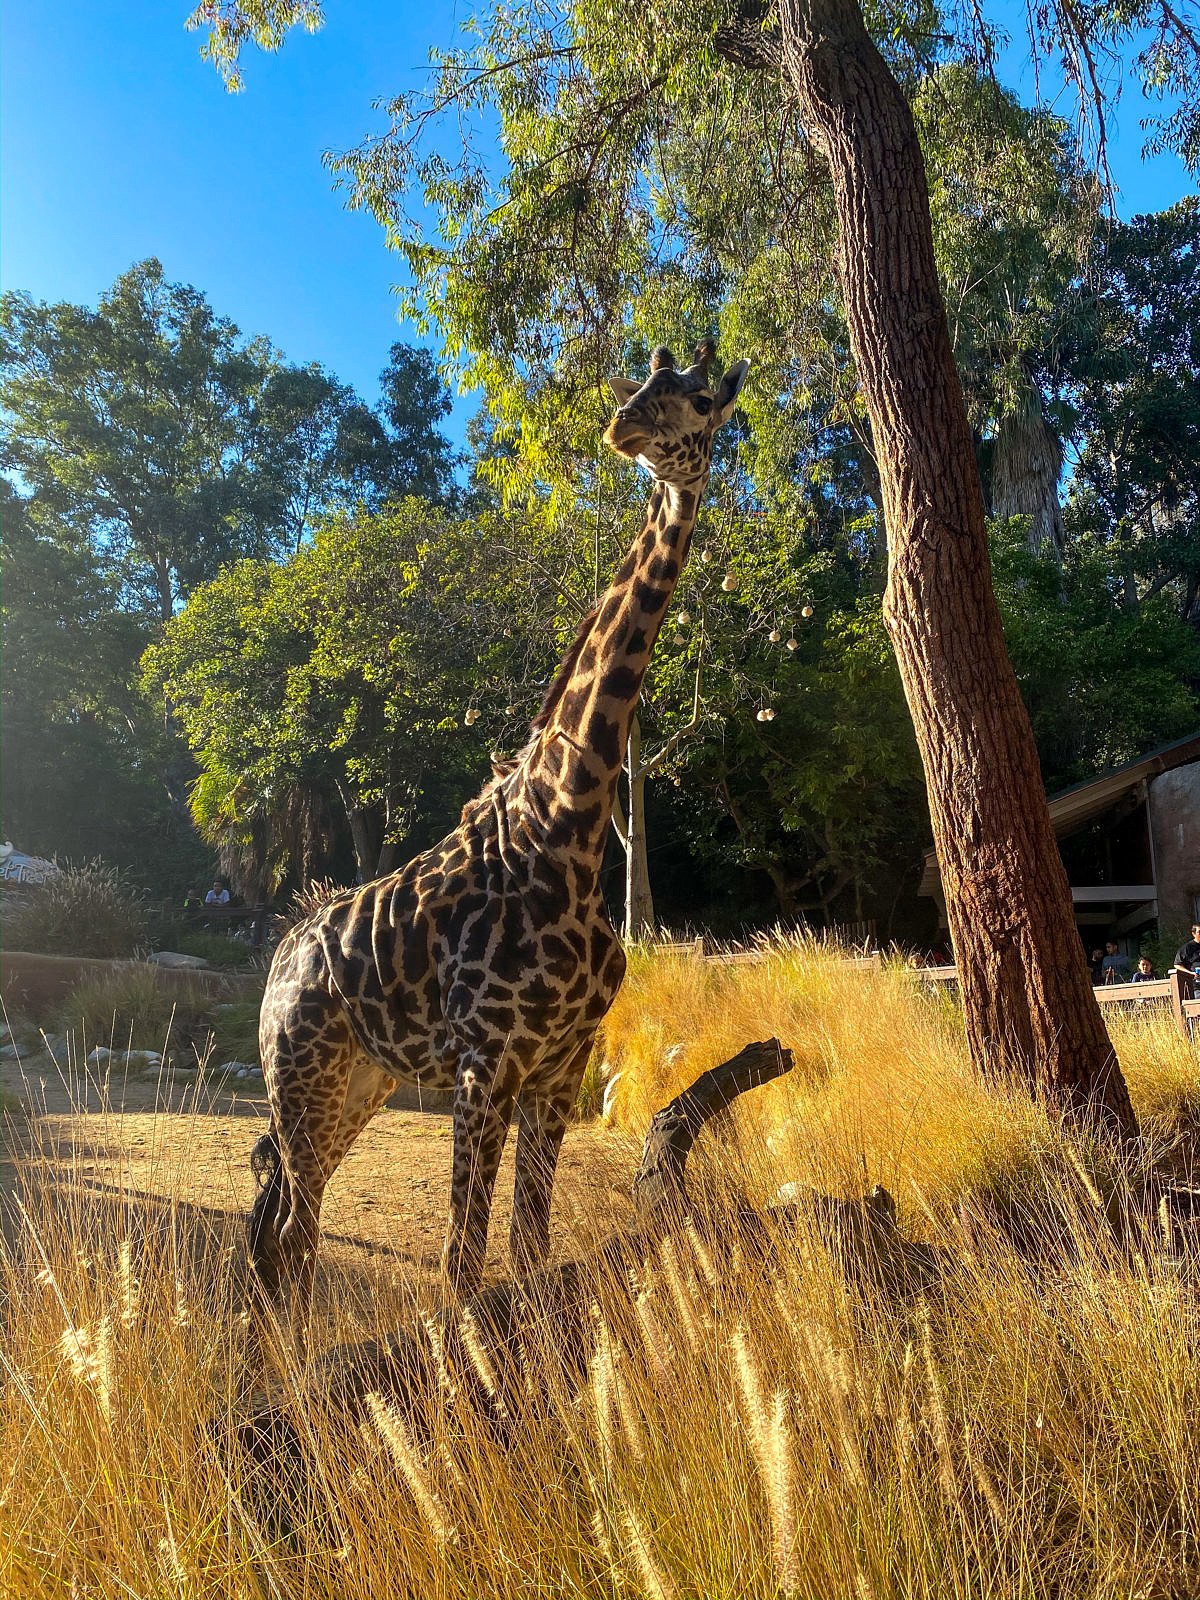 Giraffe at the Los Angeles Zoo